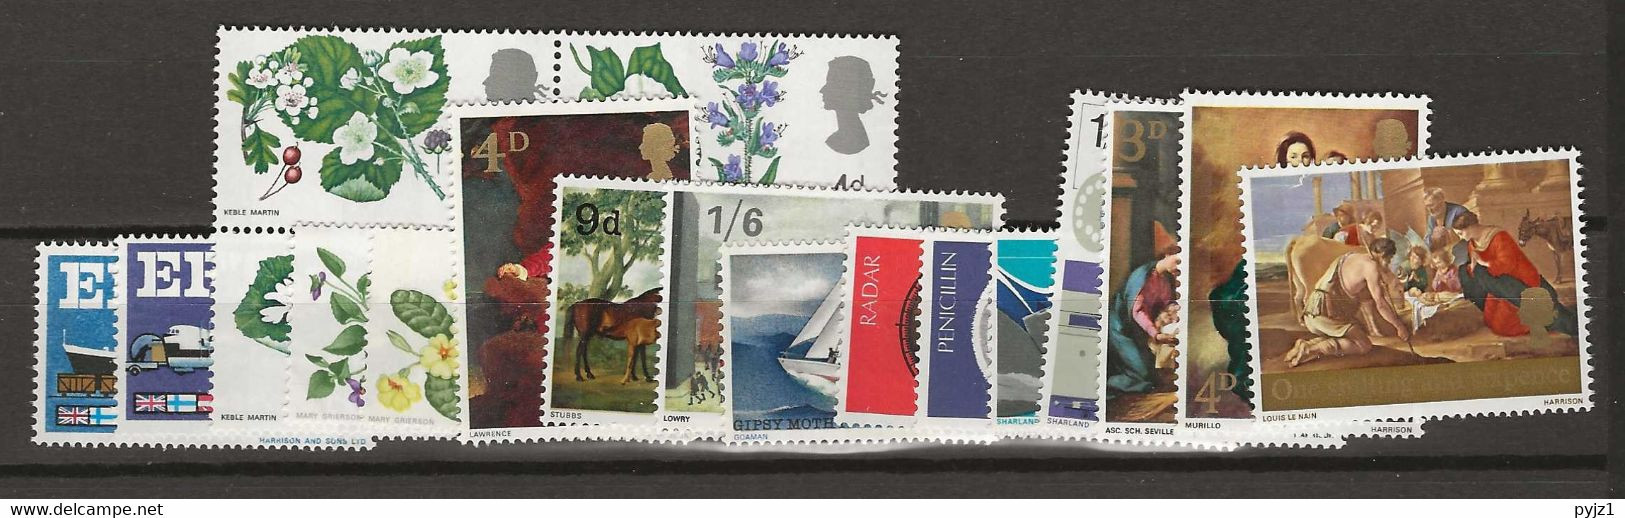 1967 MNH GB, UK, Engeland, Year Collection Commemoratives, Postfris - Ongebruikt